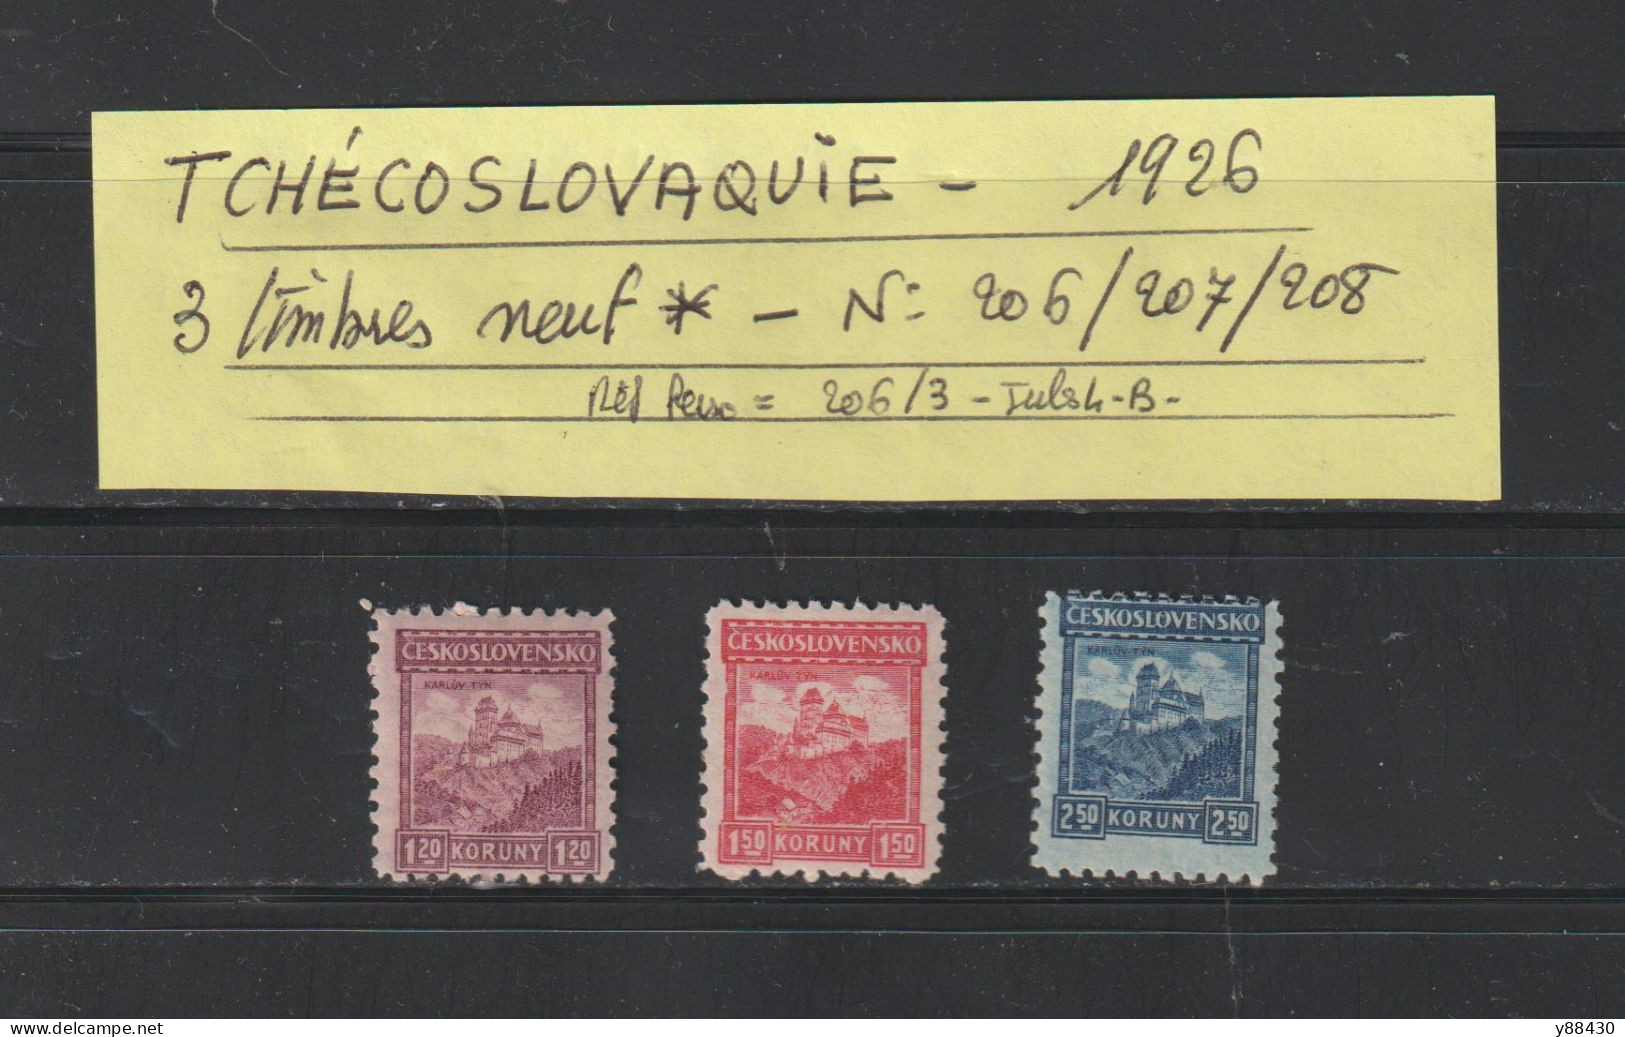 TCHÉCOSLOVAQUIE - 3 Timbres Neuf * De 1926 - N° 206 / 20 7 / 208 - Château De Karluv Tyn  - 2 Scan - Neufs